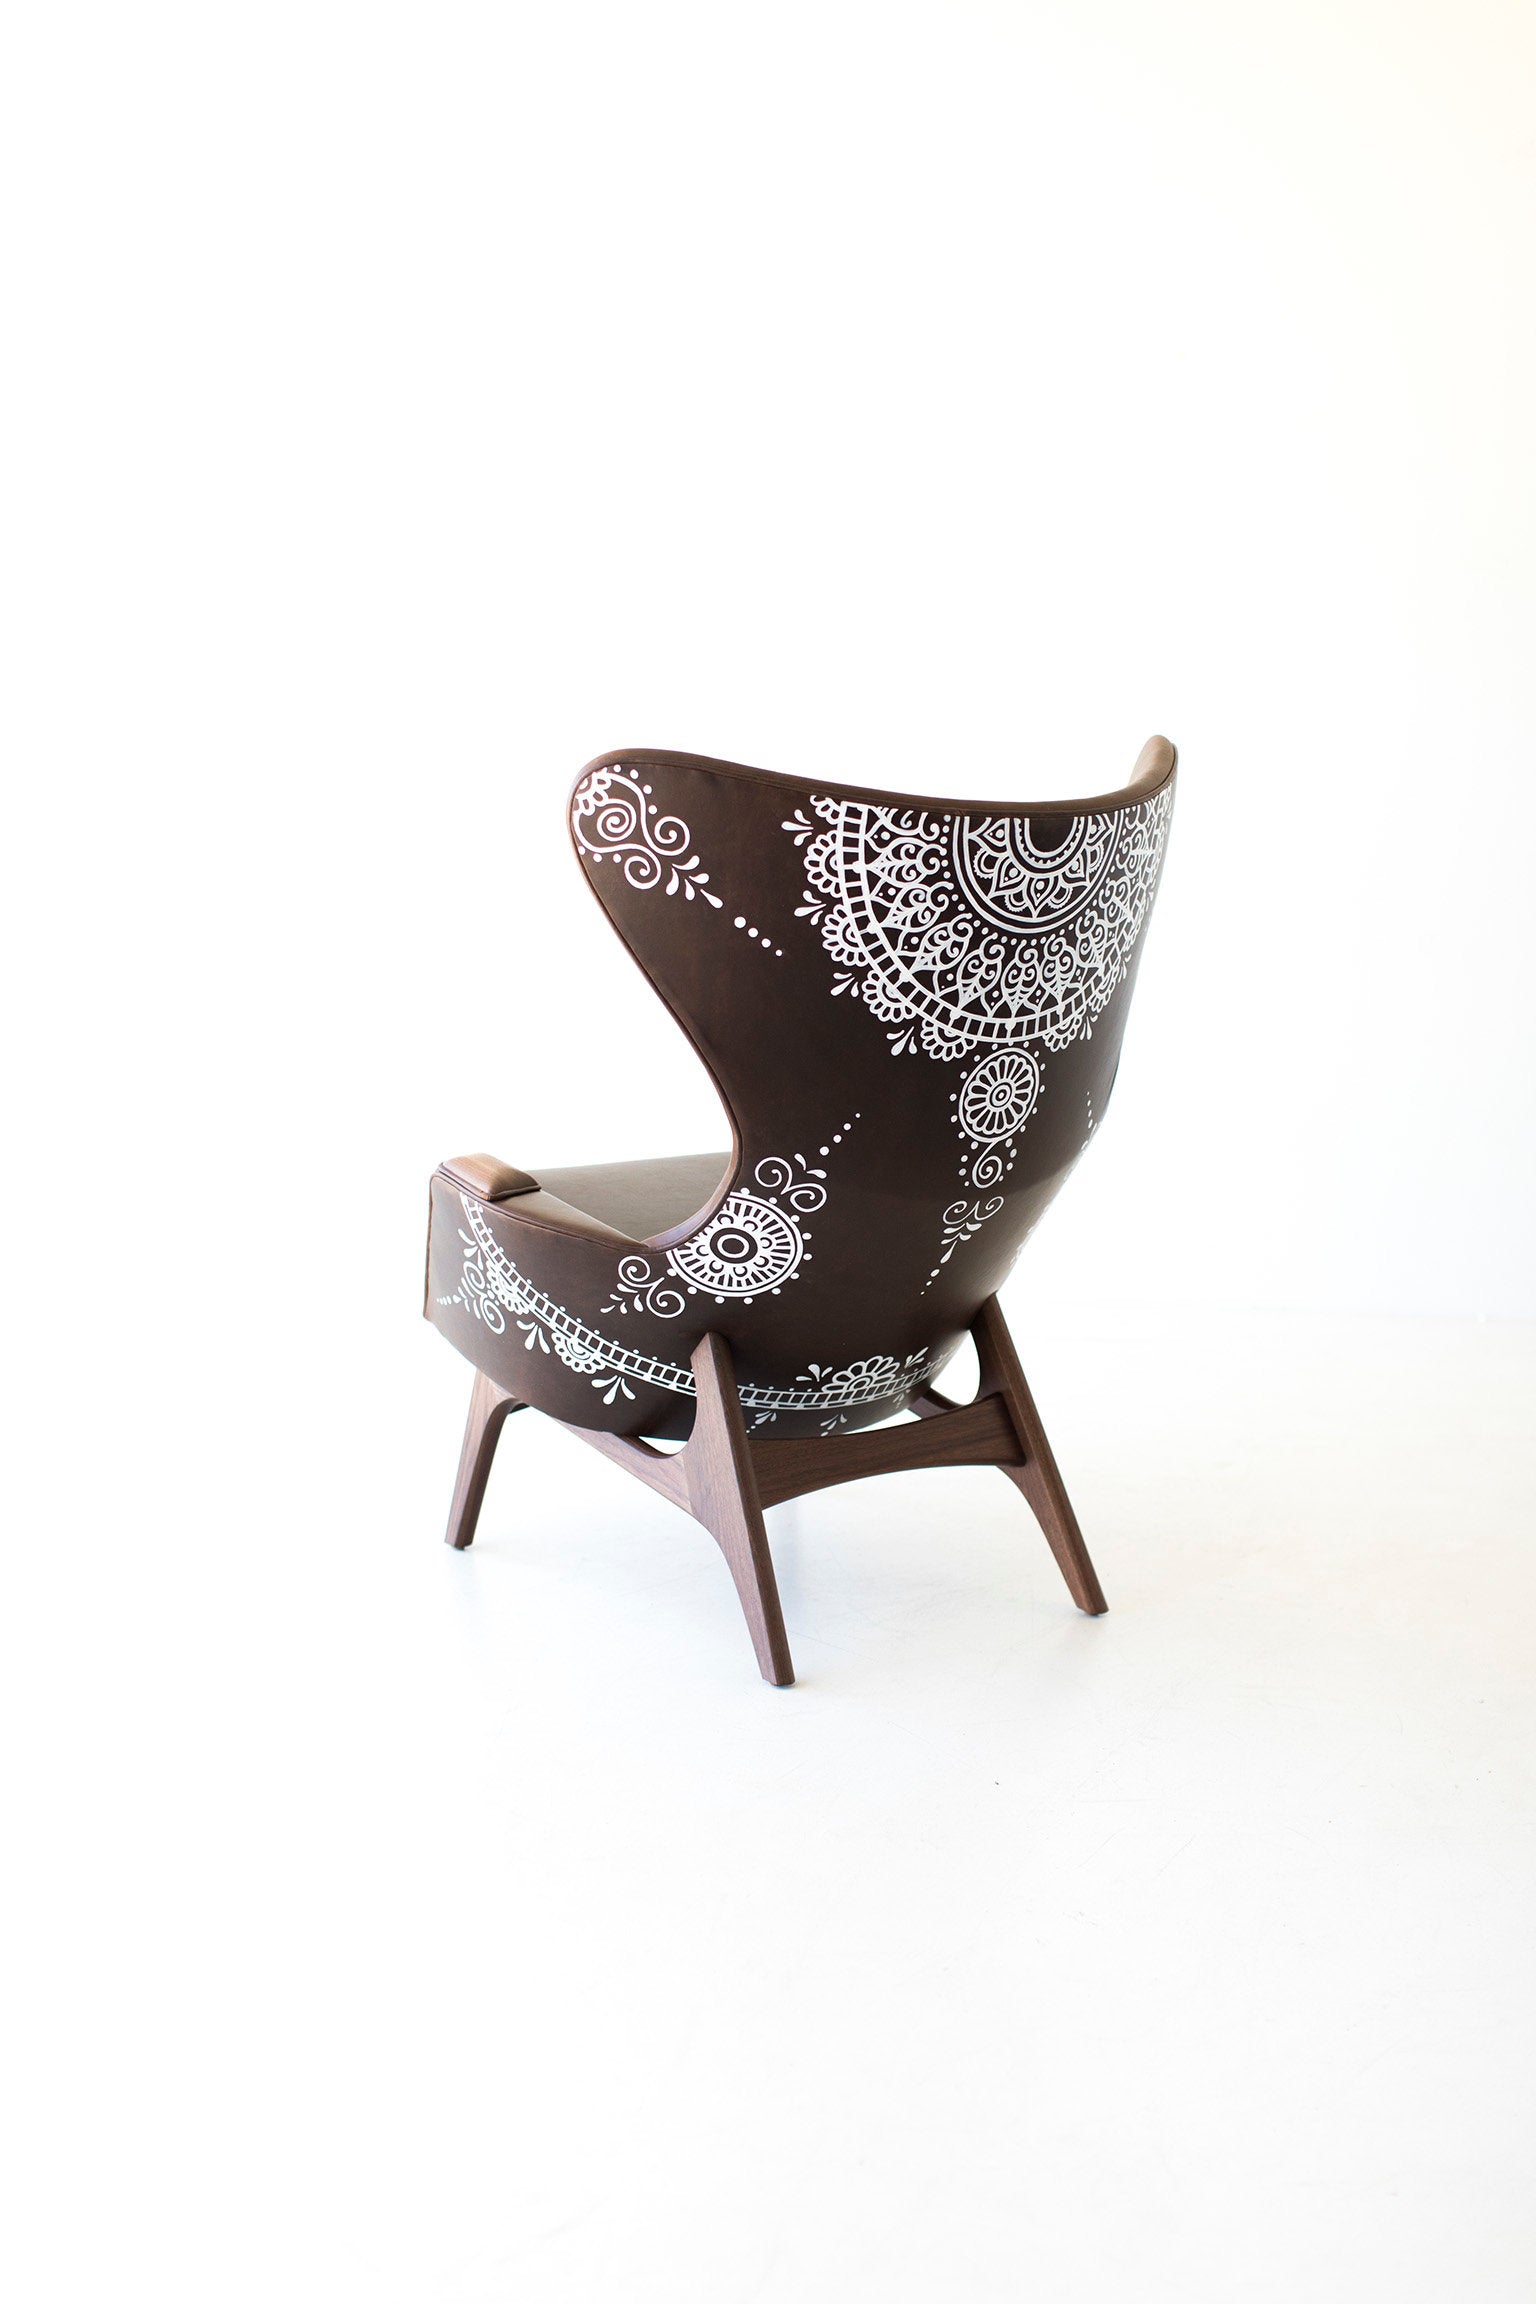 craft-associates-gypsy-wing-chair-1407-02